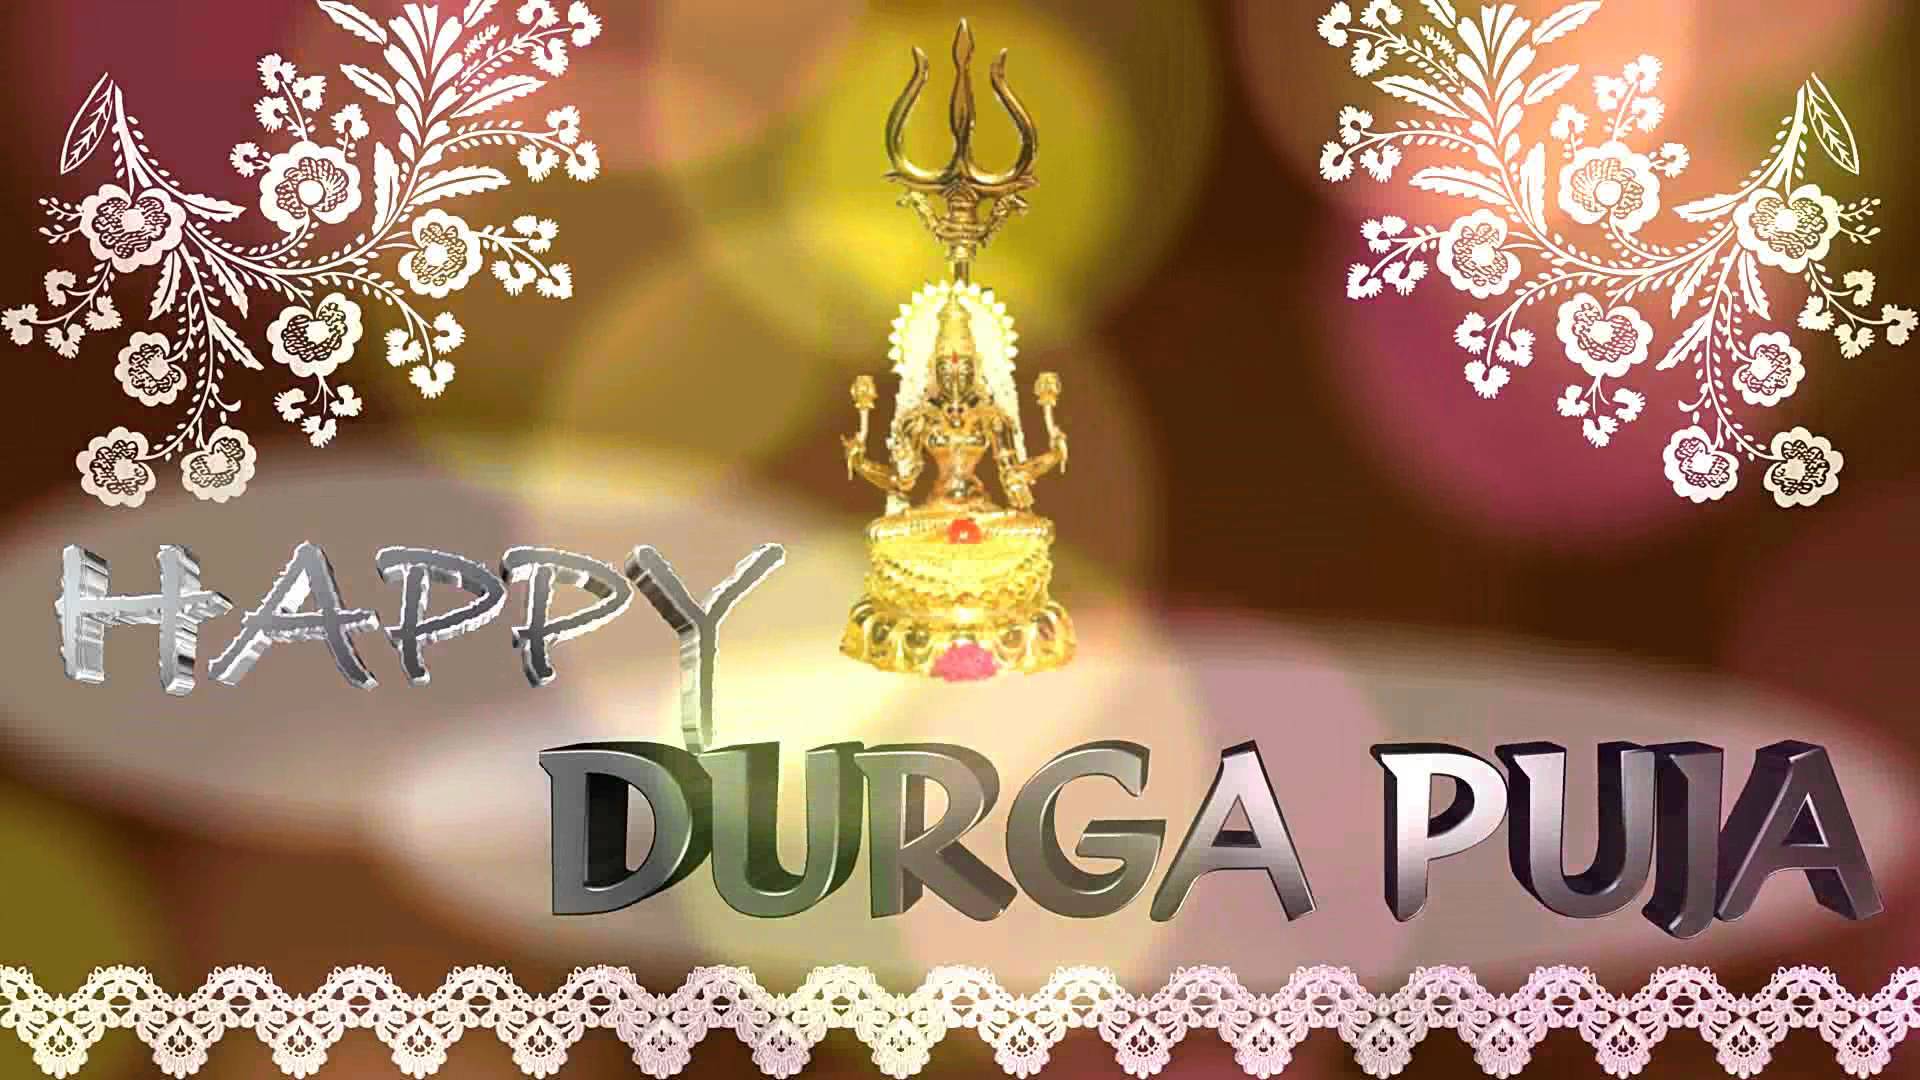 Happy Durga Puja Wallpapers